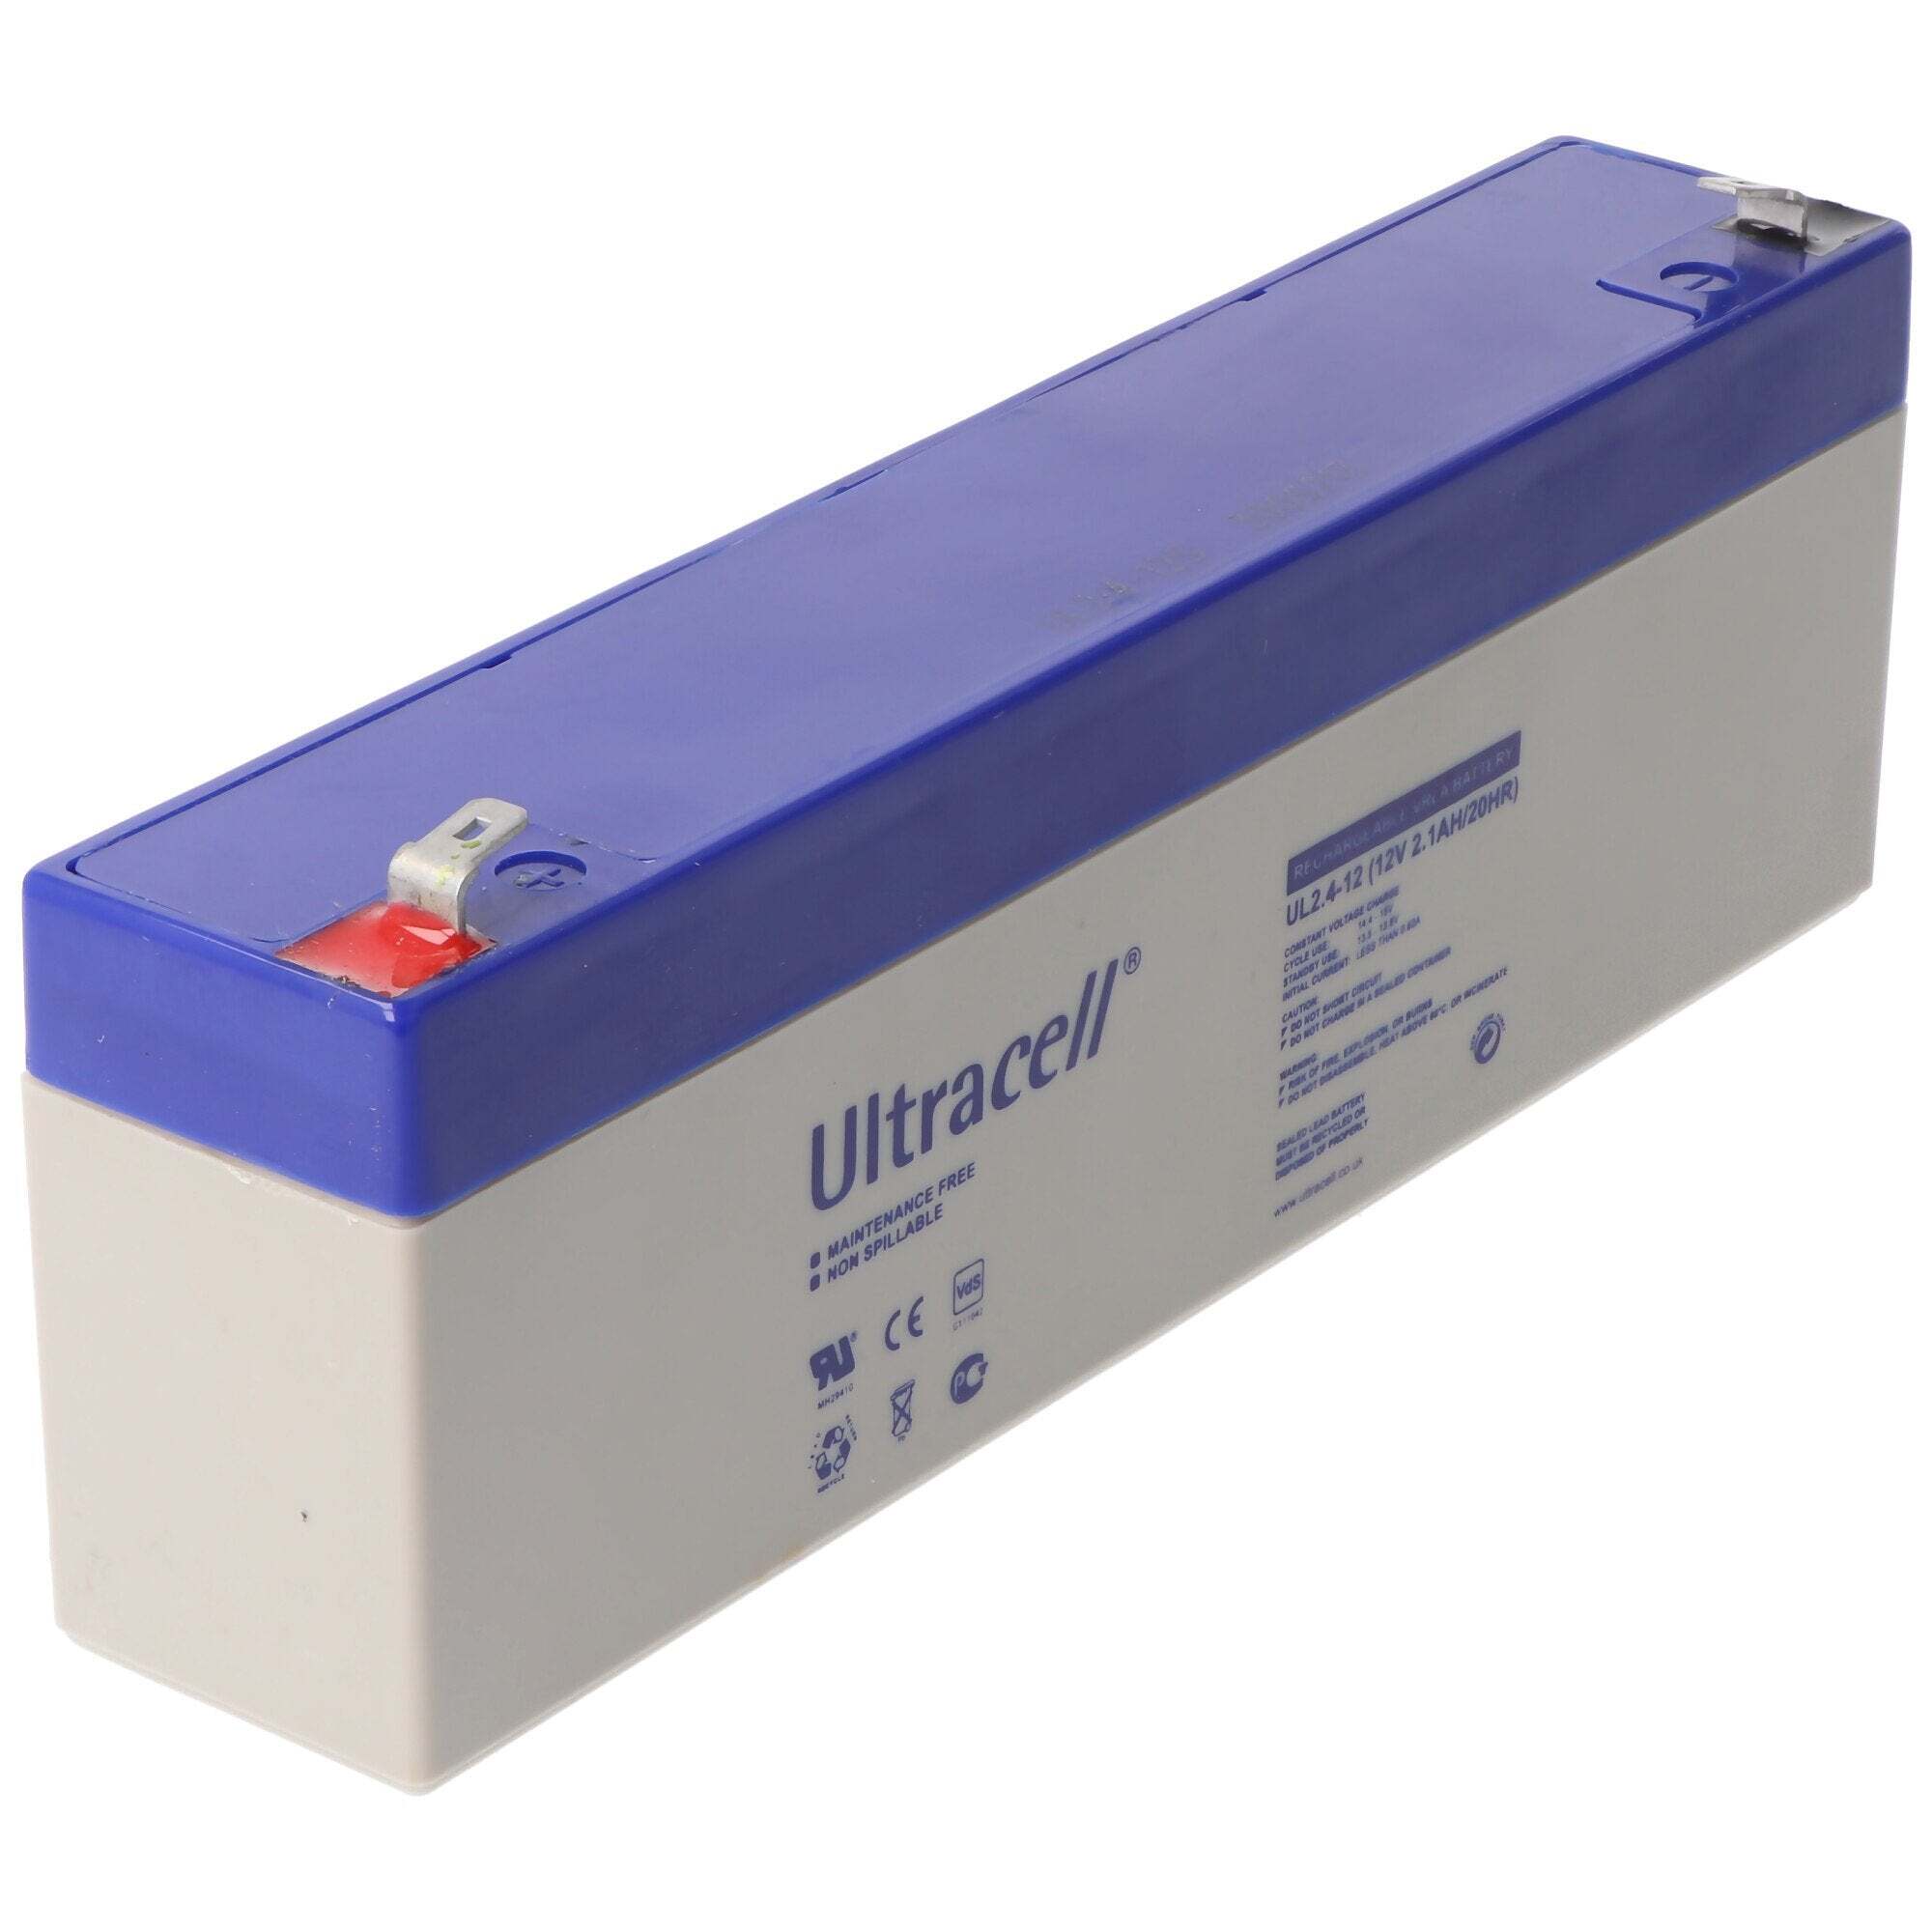 Ultracell Batterij voor ABUS alarmsirene knipperlicht SG1800 Jablotron Oasis alarmcentrale